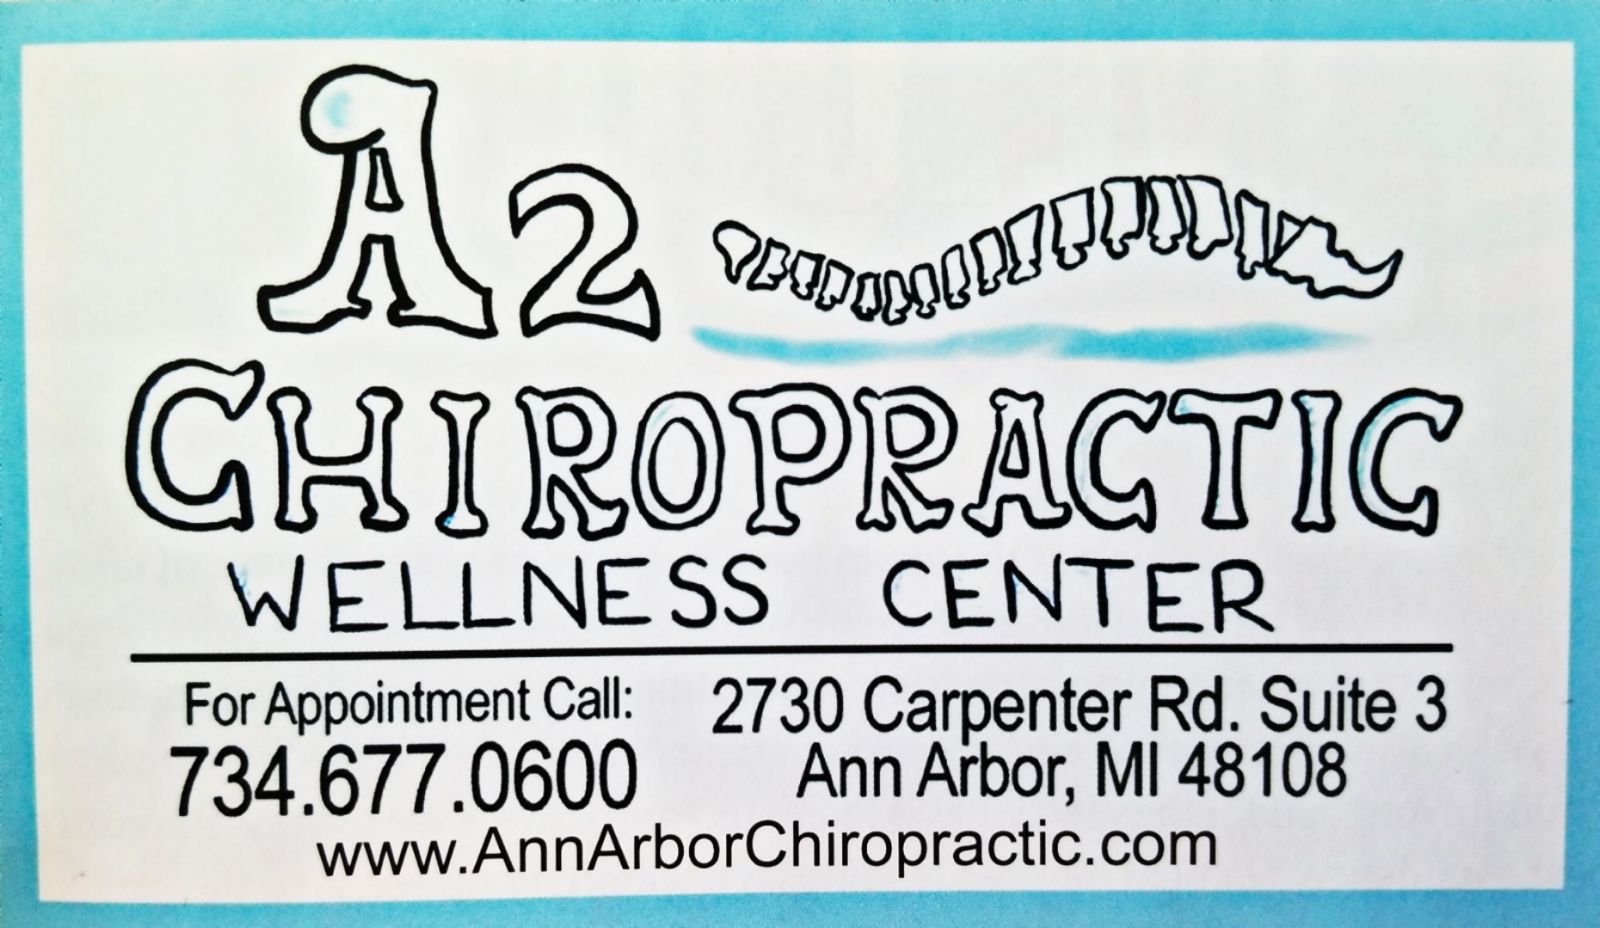 Ann Arbor Chiropractic Wellness Center